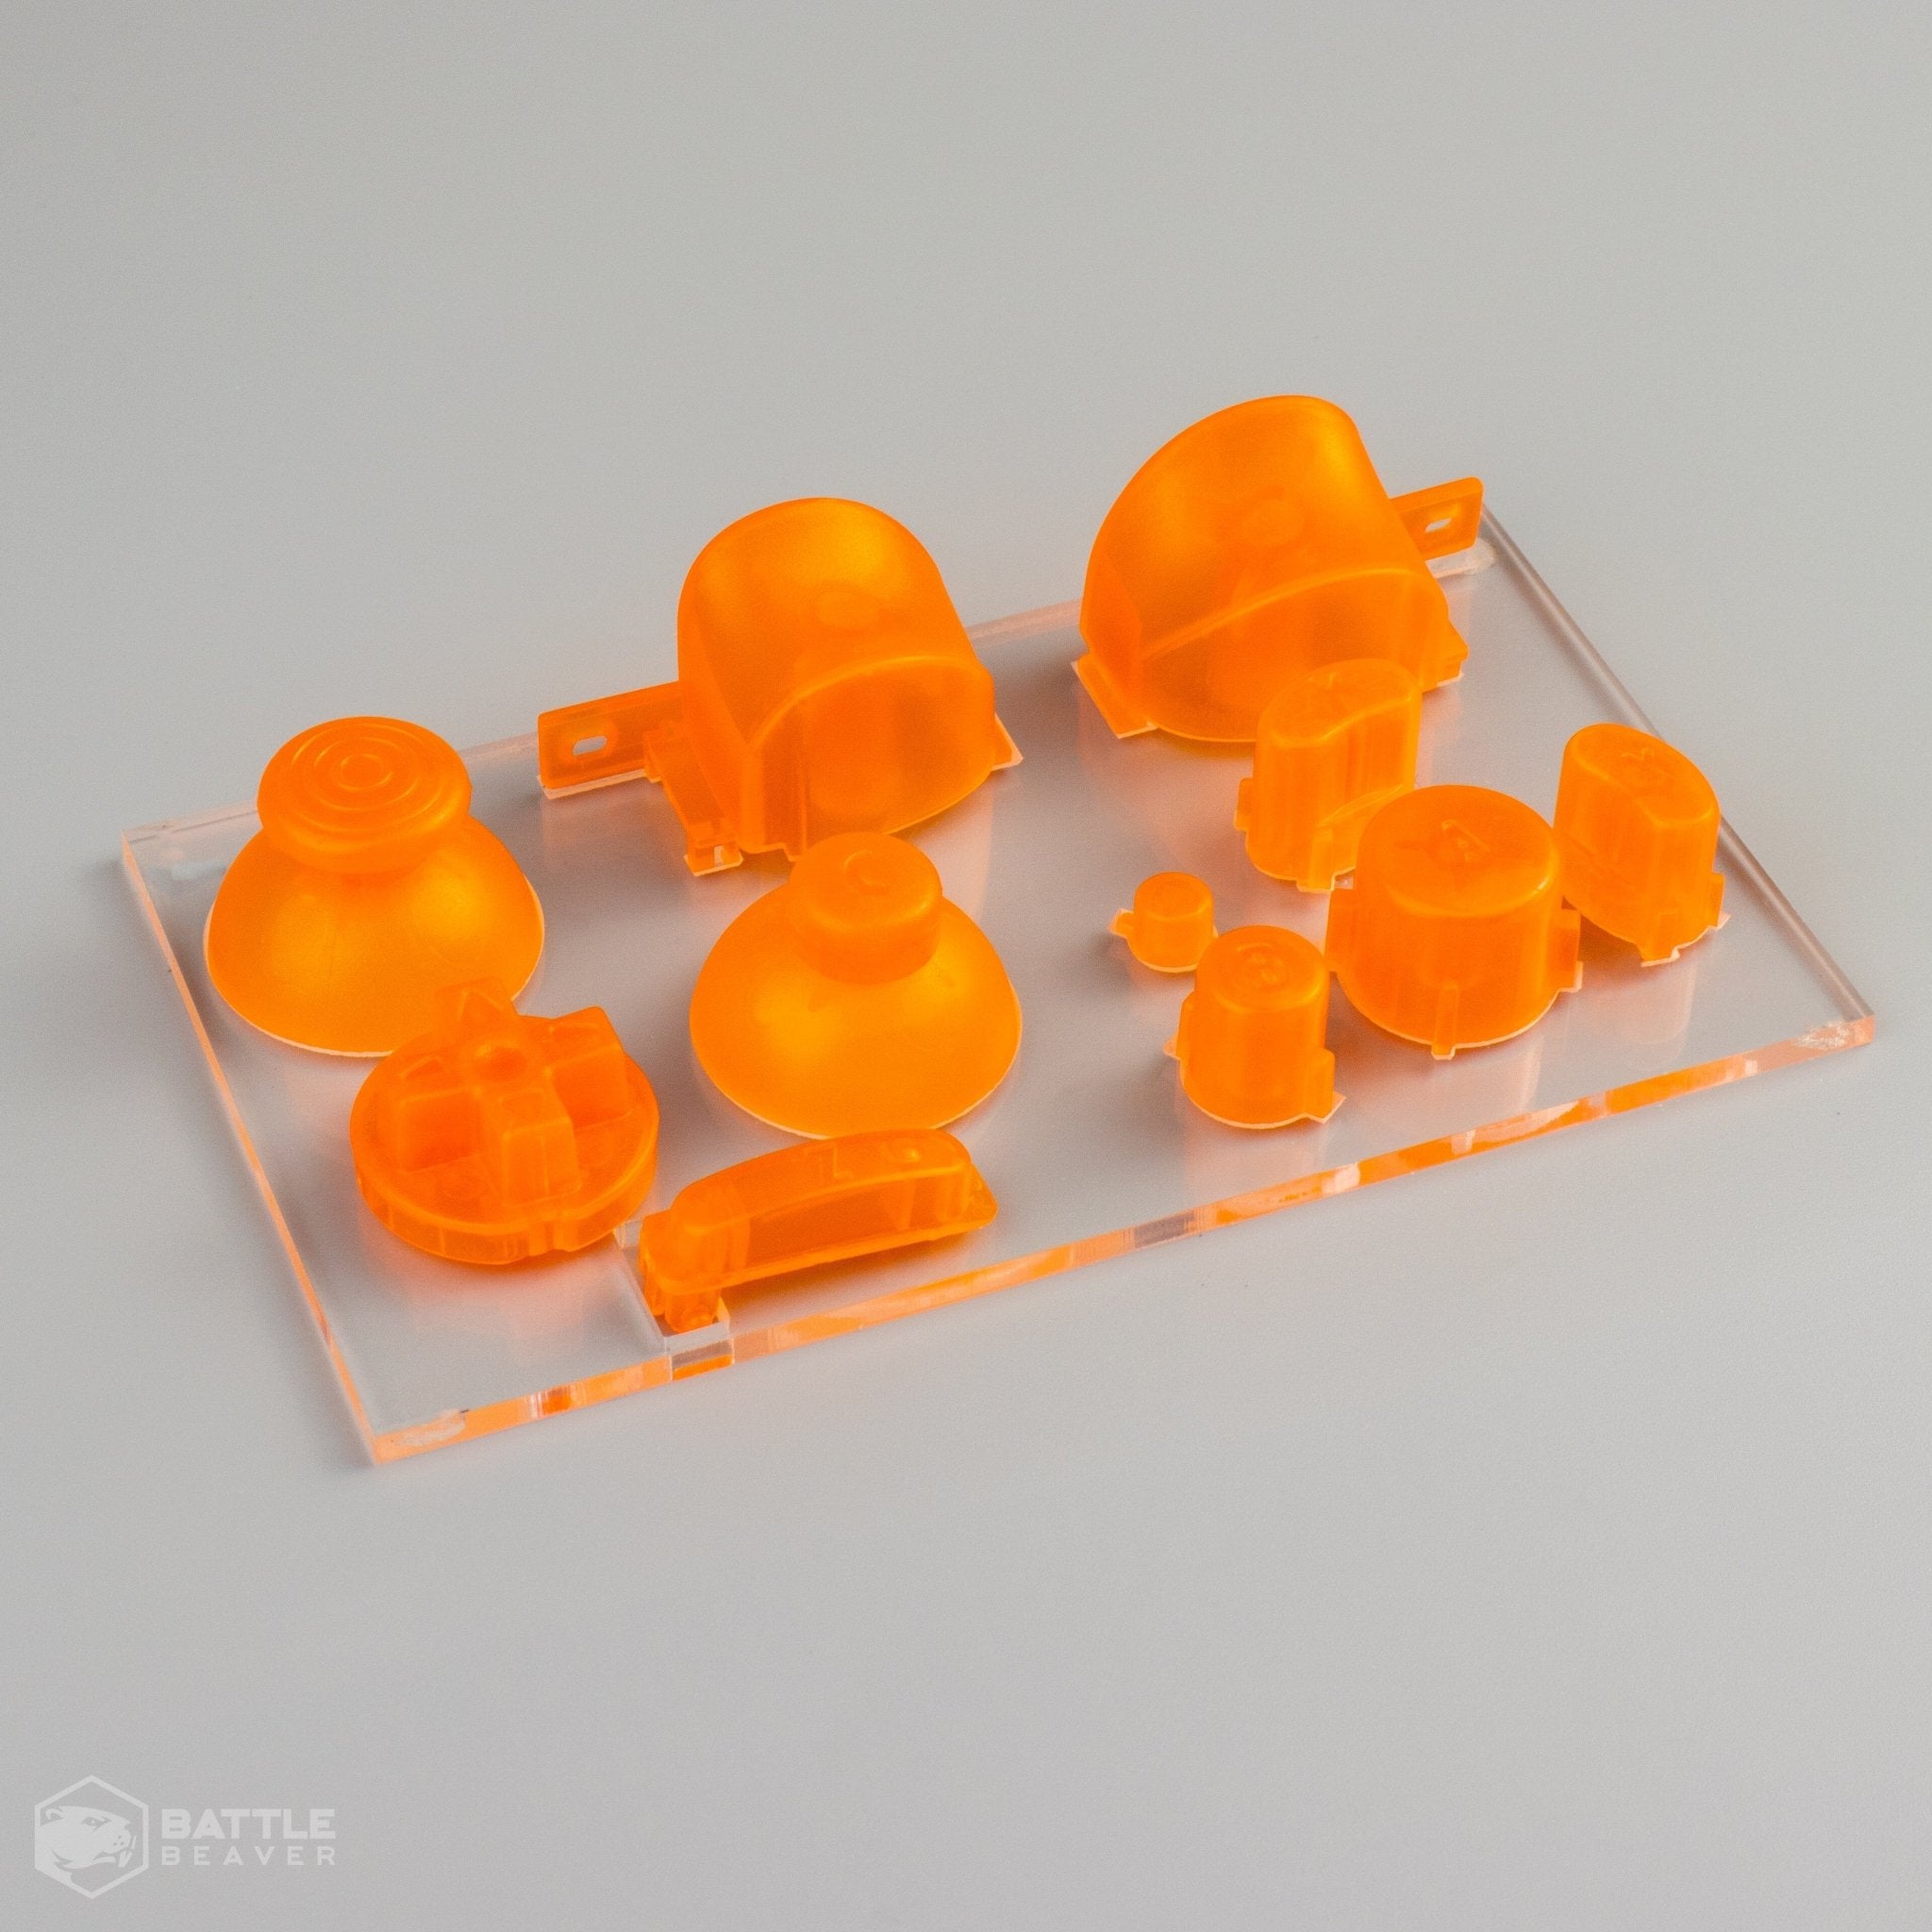 3rd Party Gamecube Parts Kit - Battle Beaver Customs - Crystal Orange